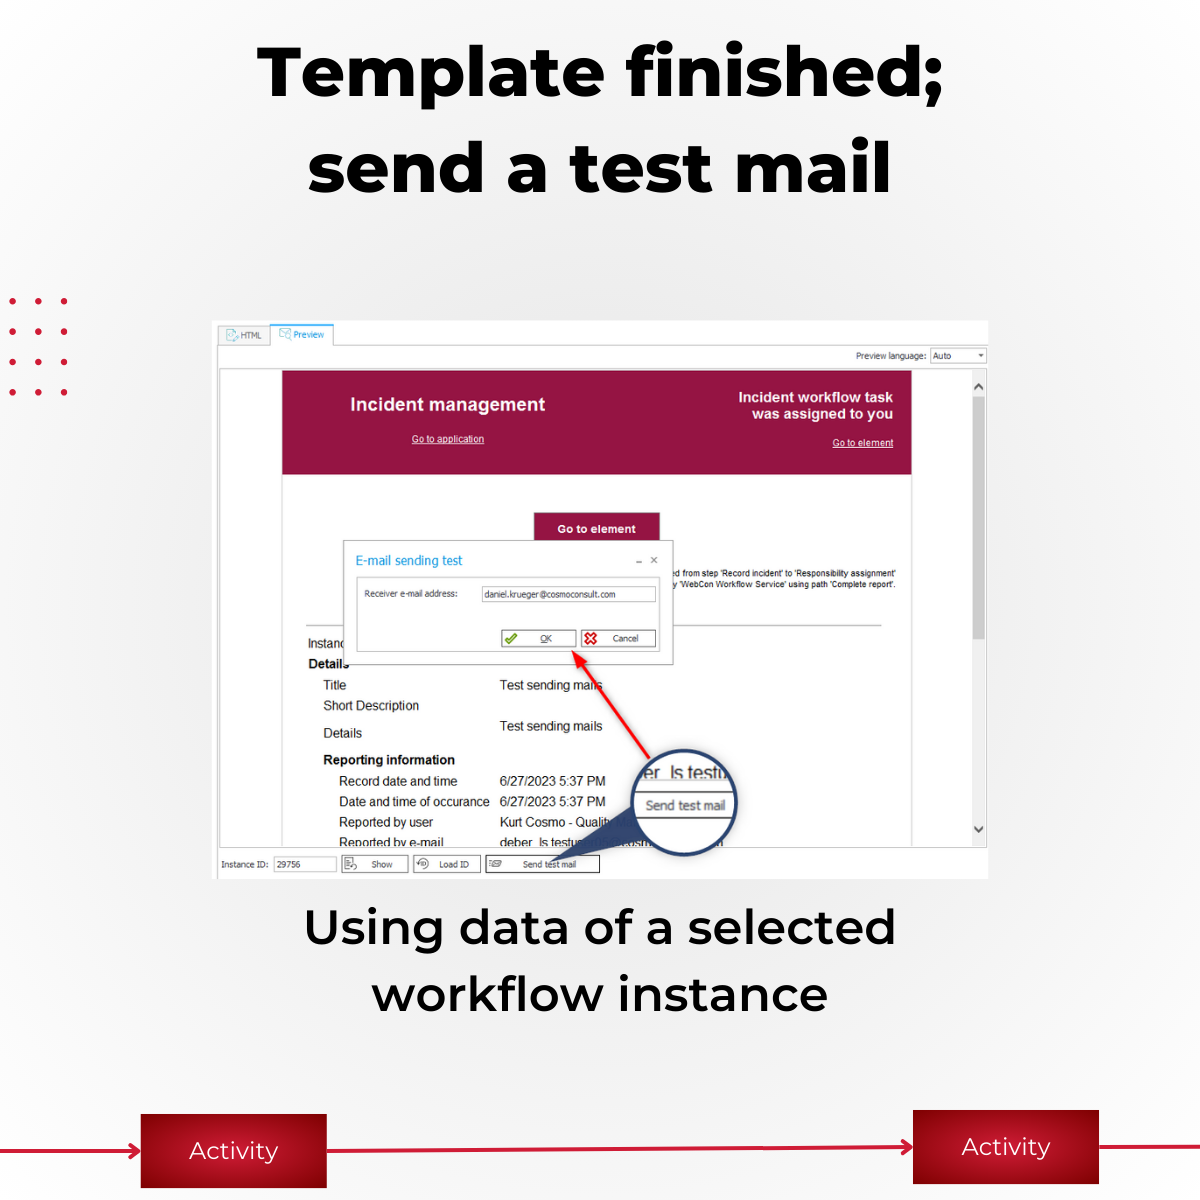 Send a test mail